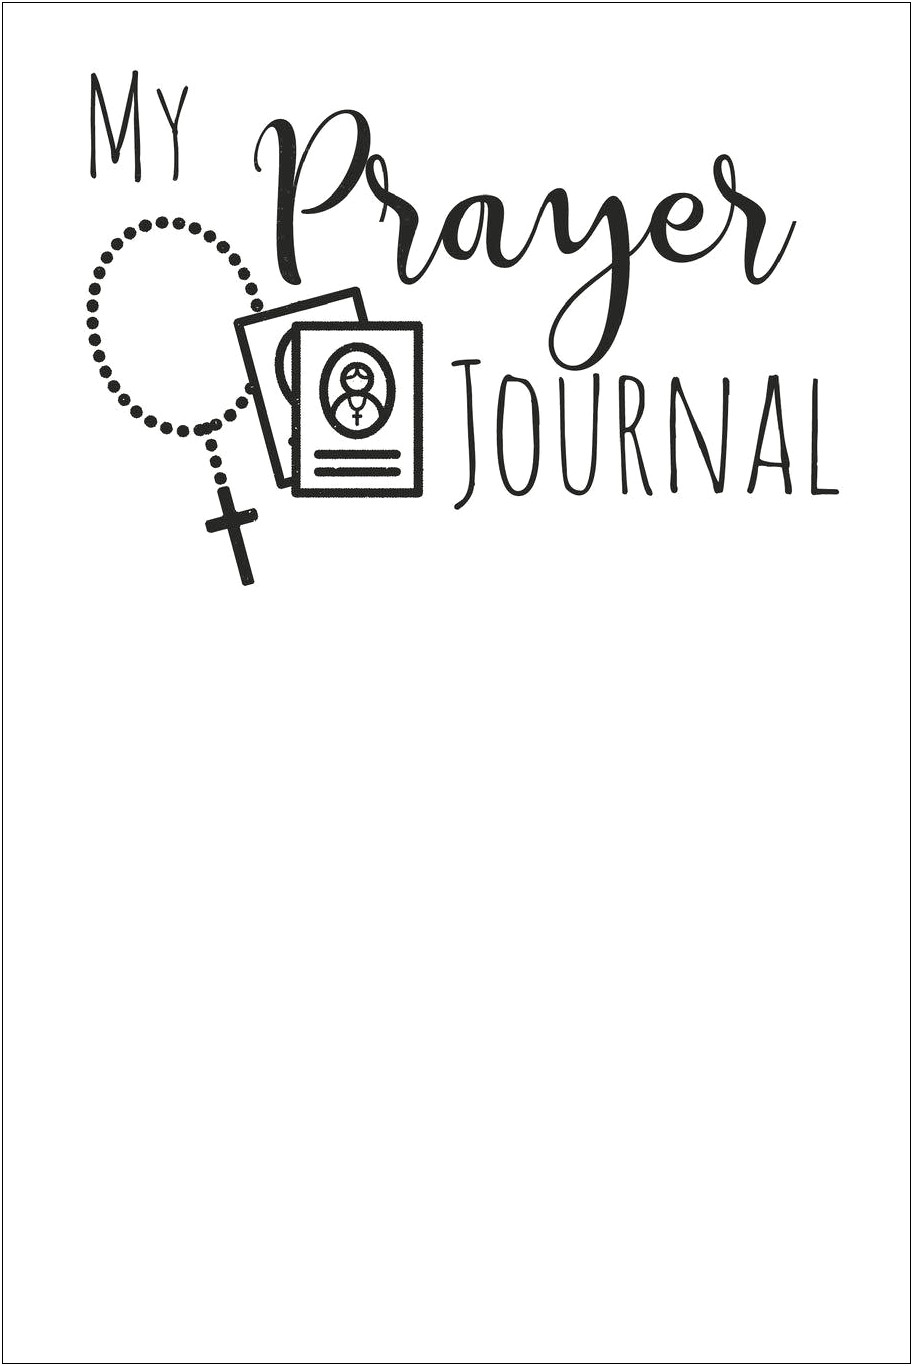 Free Children's Prayer Journal Template